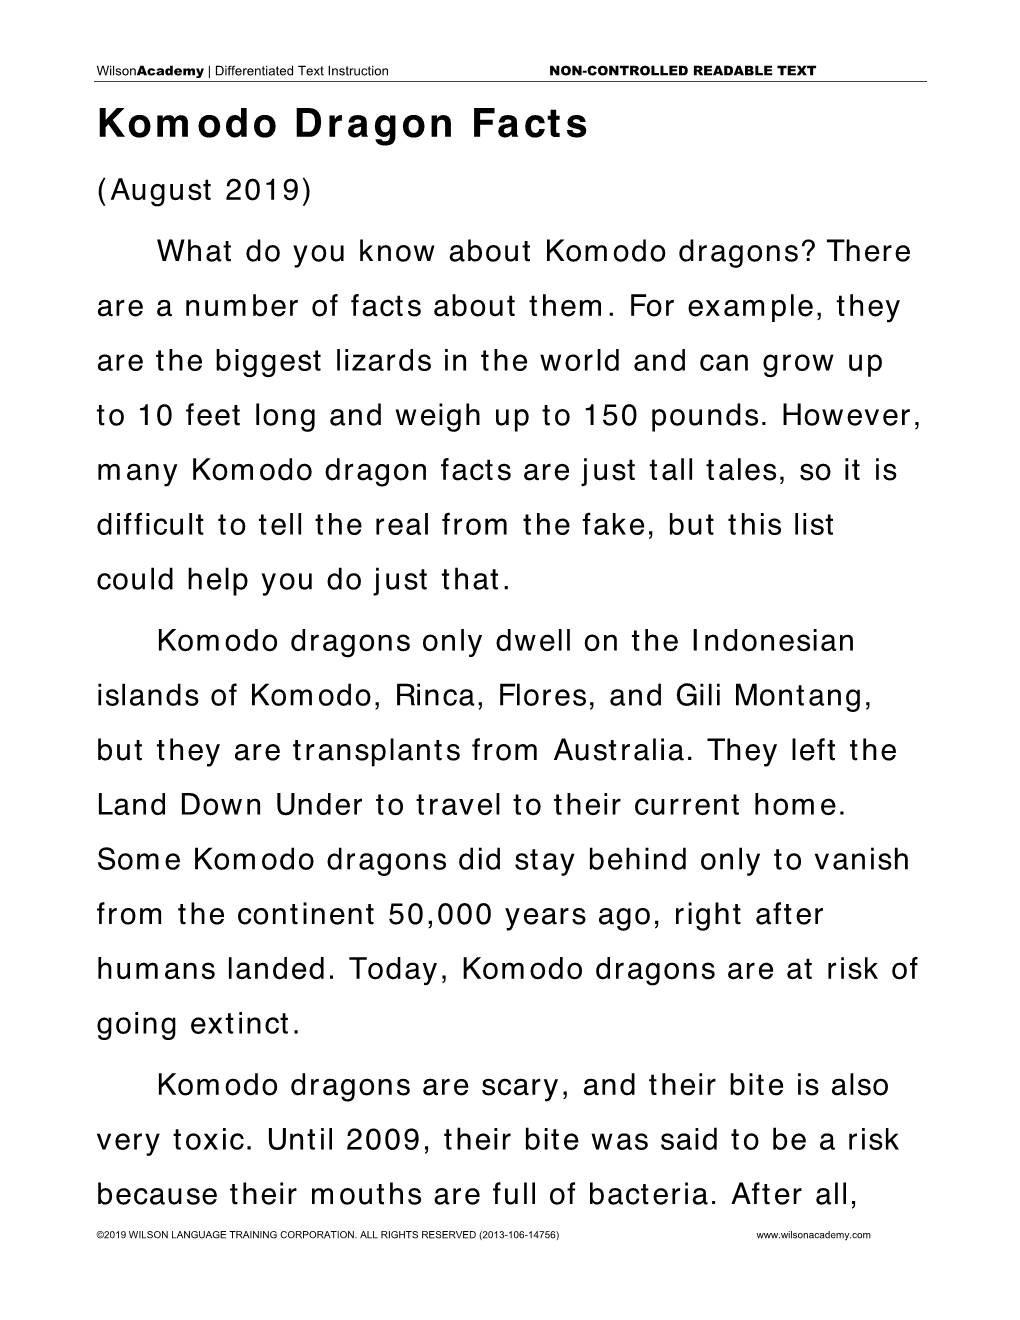 Komodo Dragon Facts